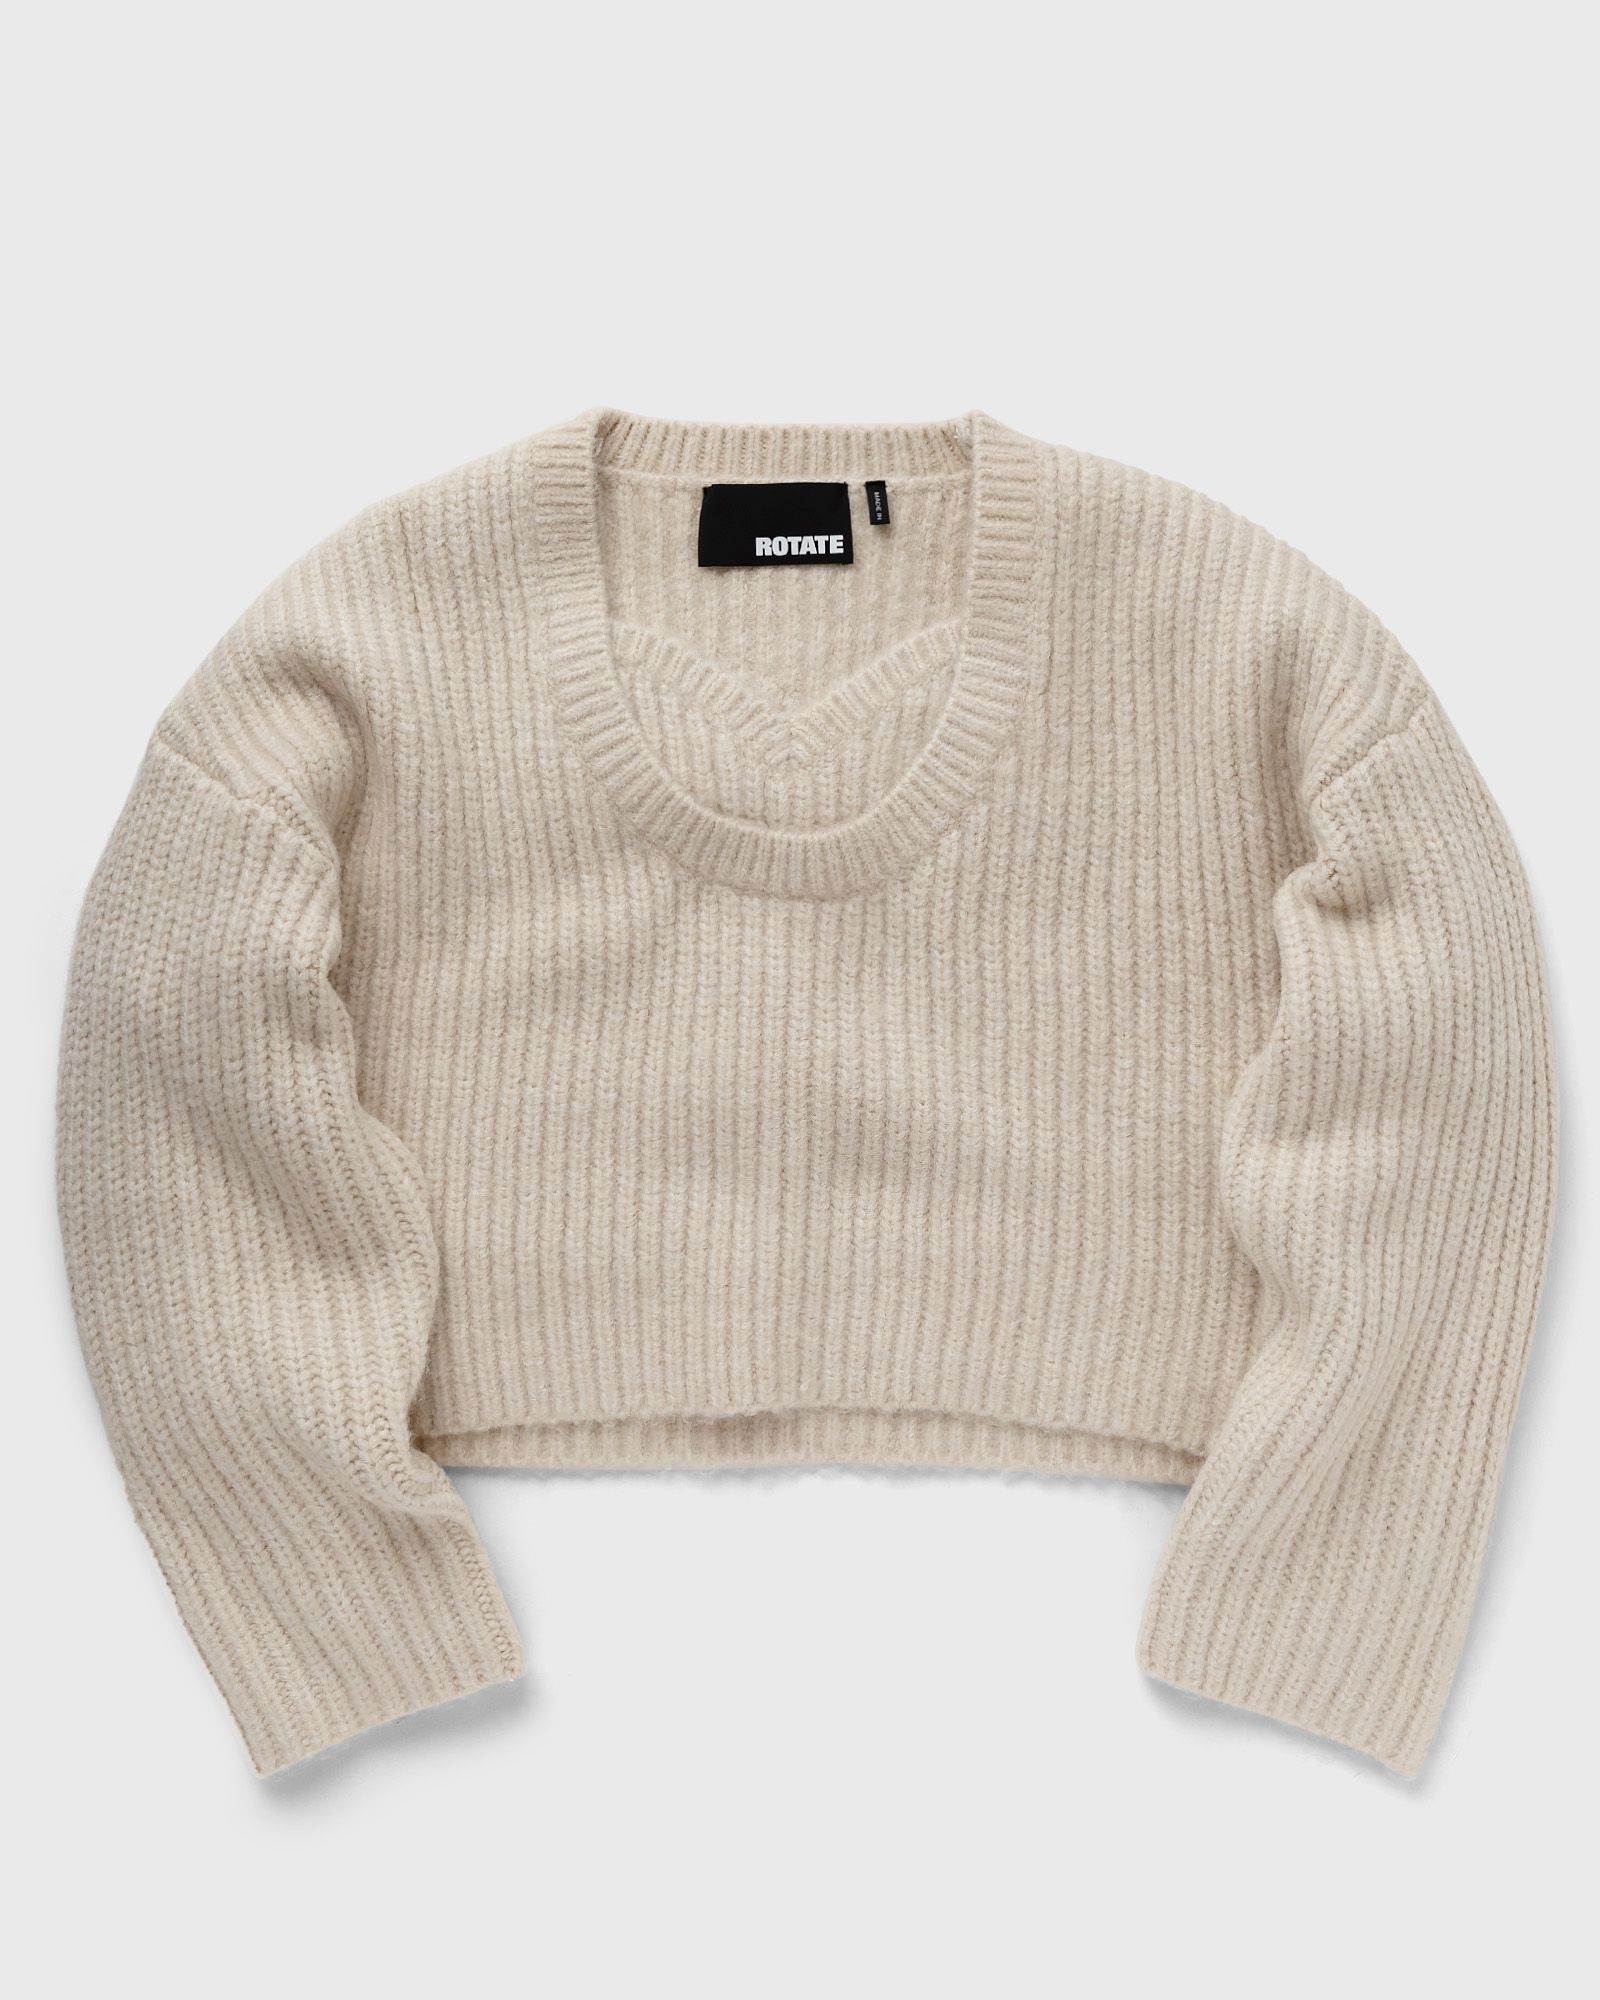 ROTATE Birger Christensen - cable knit crop sweater women pullovers white in größe:l